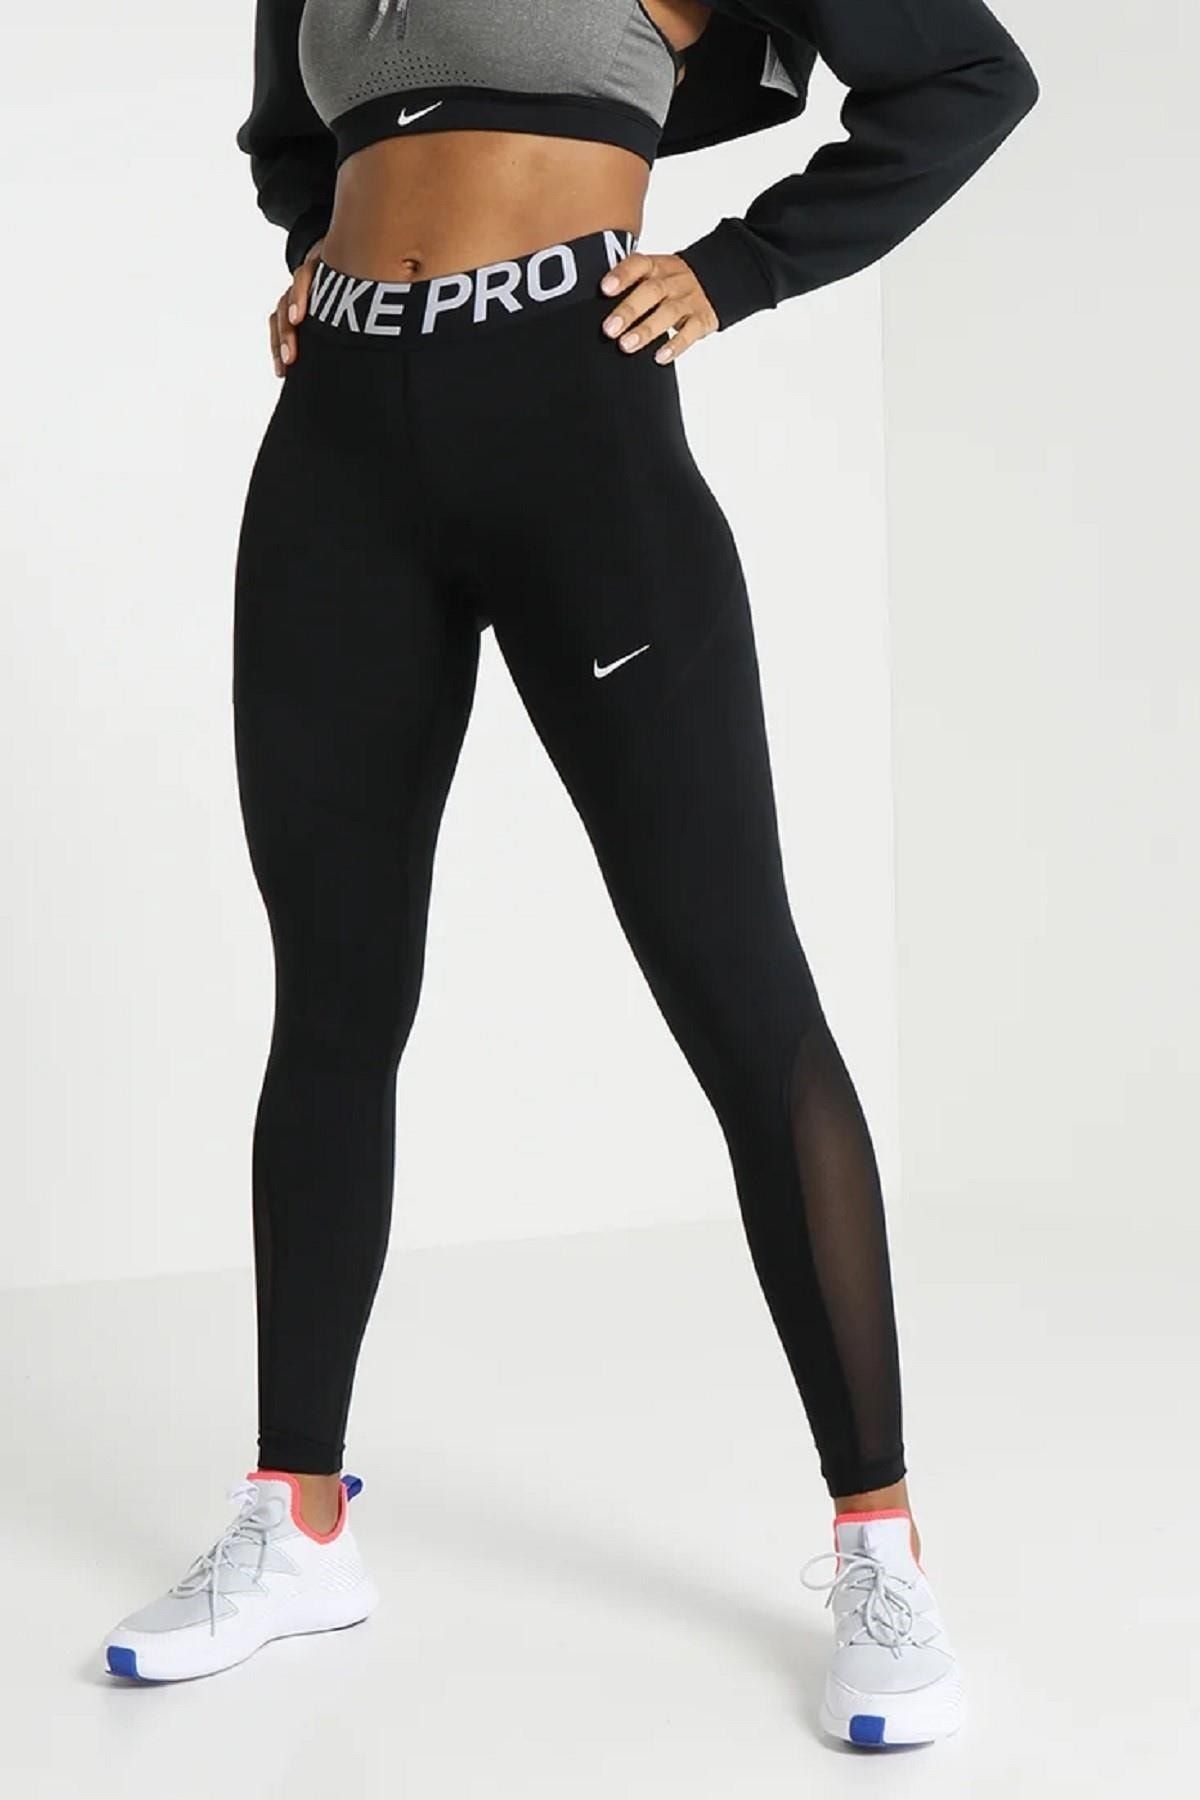 Nike Pro Tigh Fit Full Length Toparlayıcı Uzun Siyah Tayt